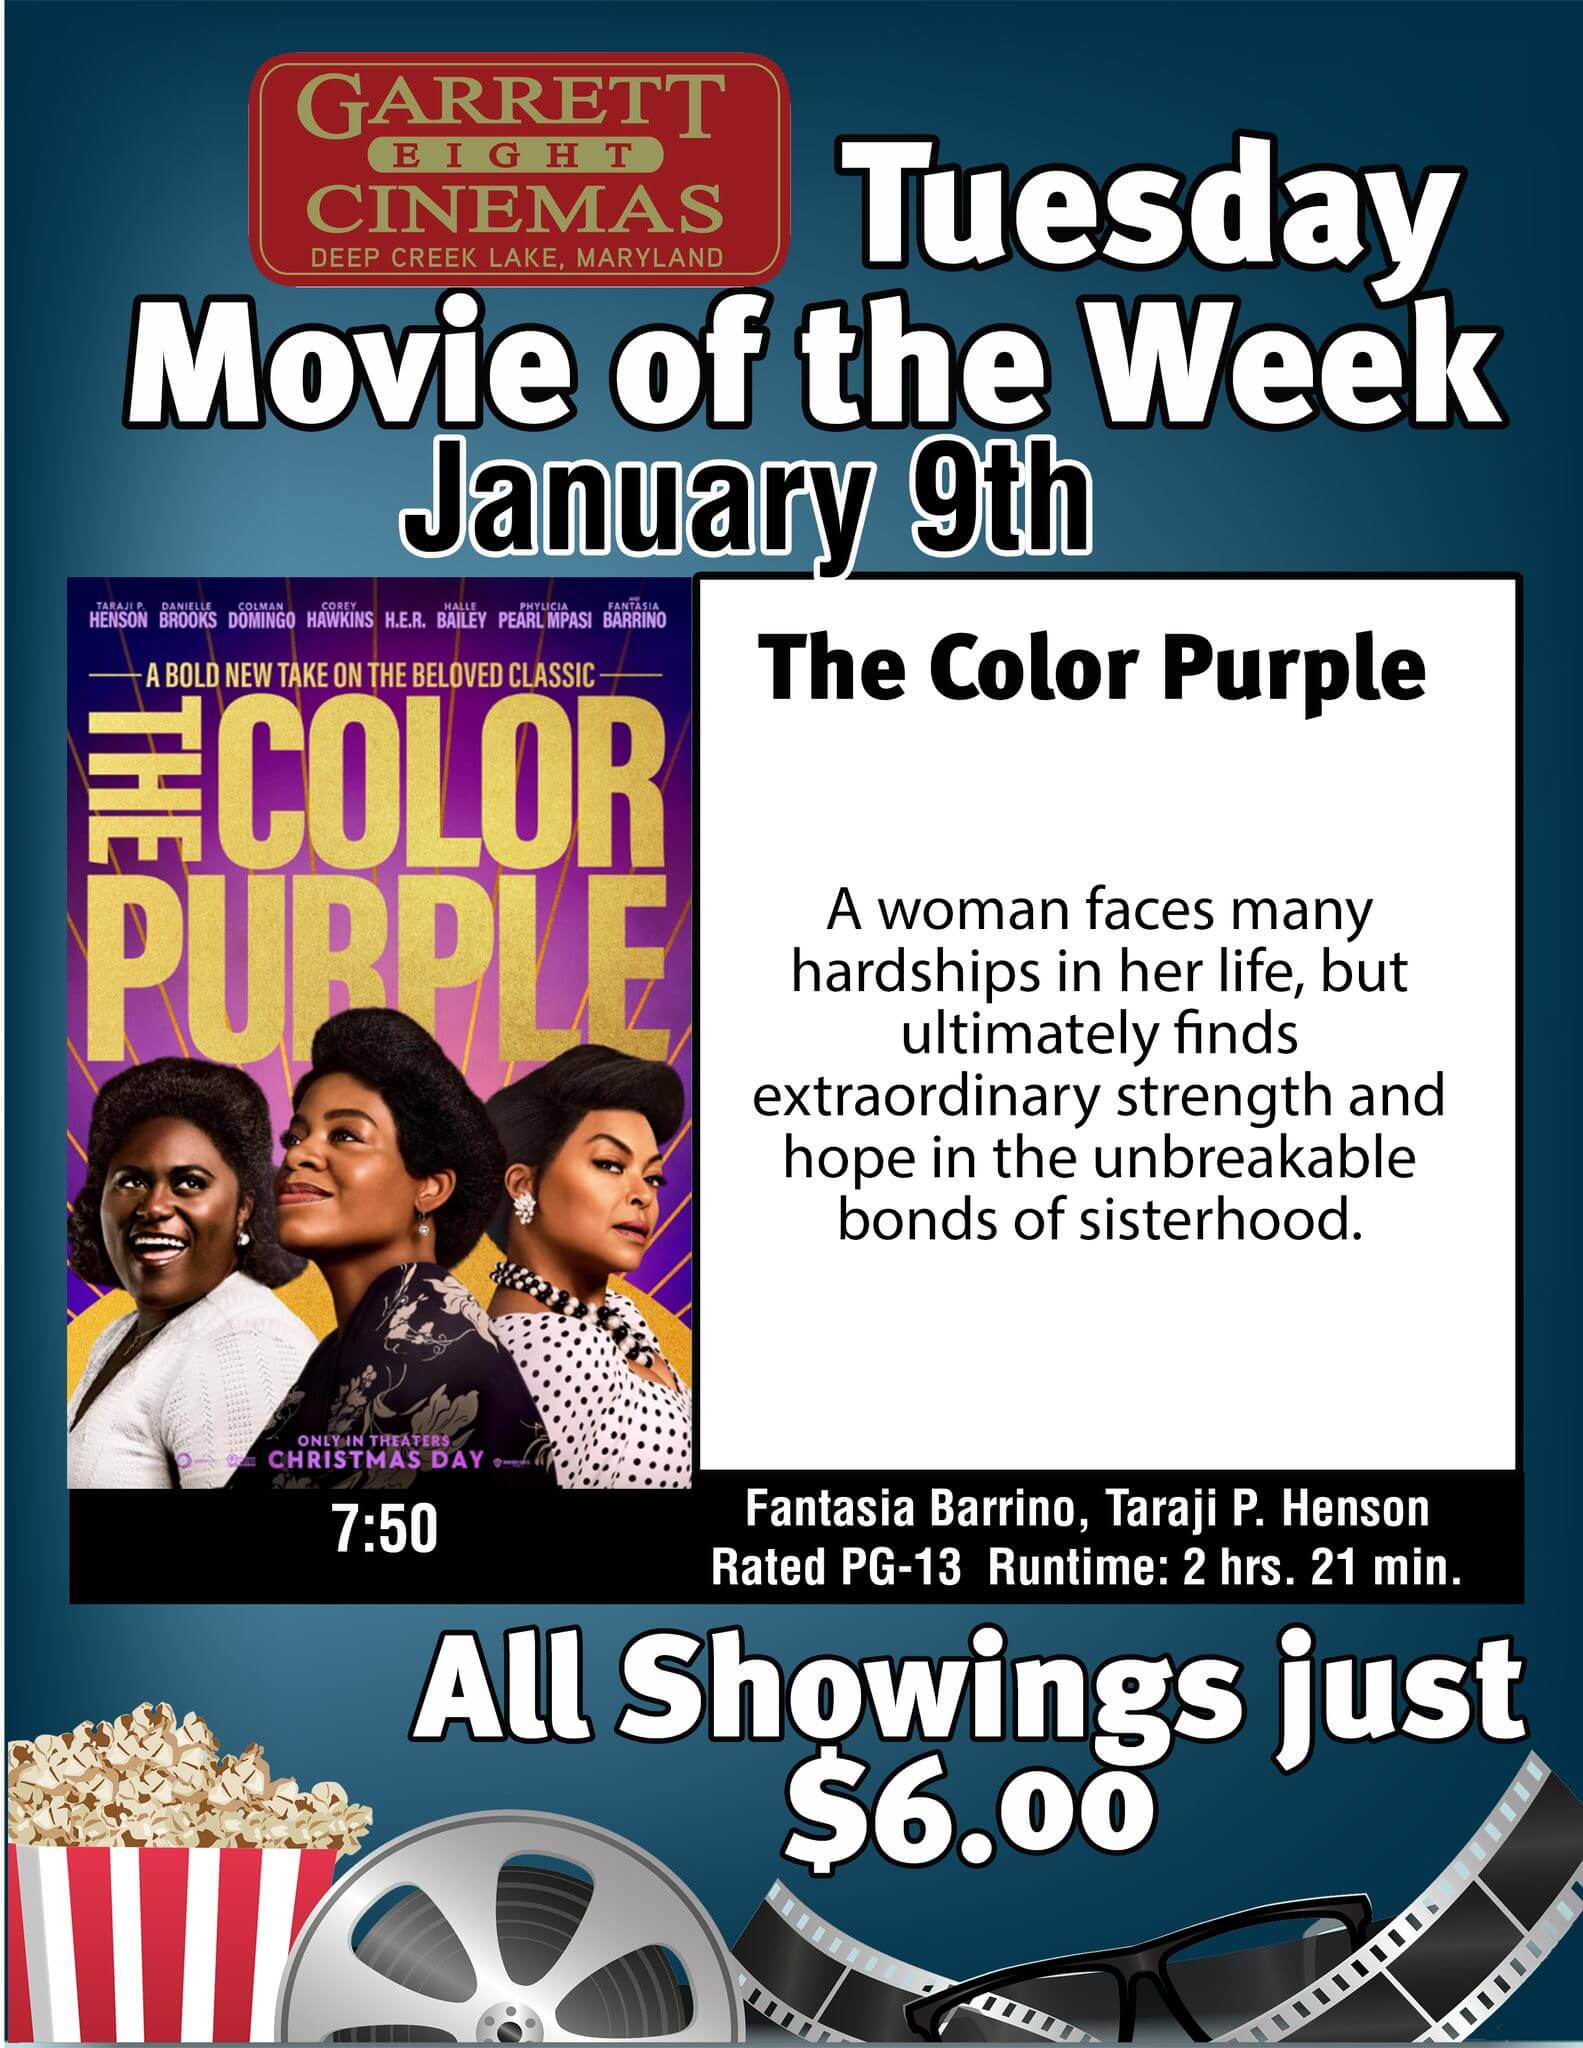 Garrett 8 Cinemas: Tuesday Movie of the Week (The Color Purple) at Deep Creek Lake, MD